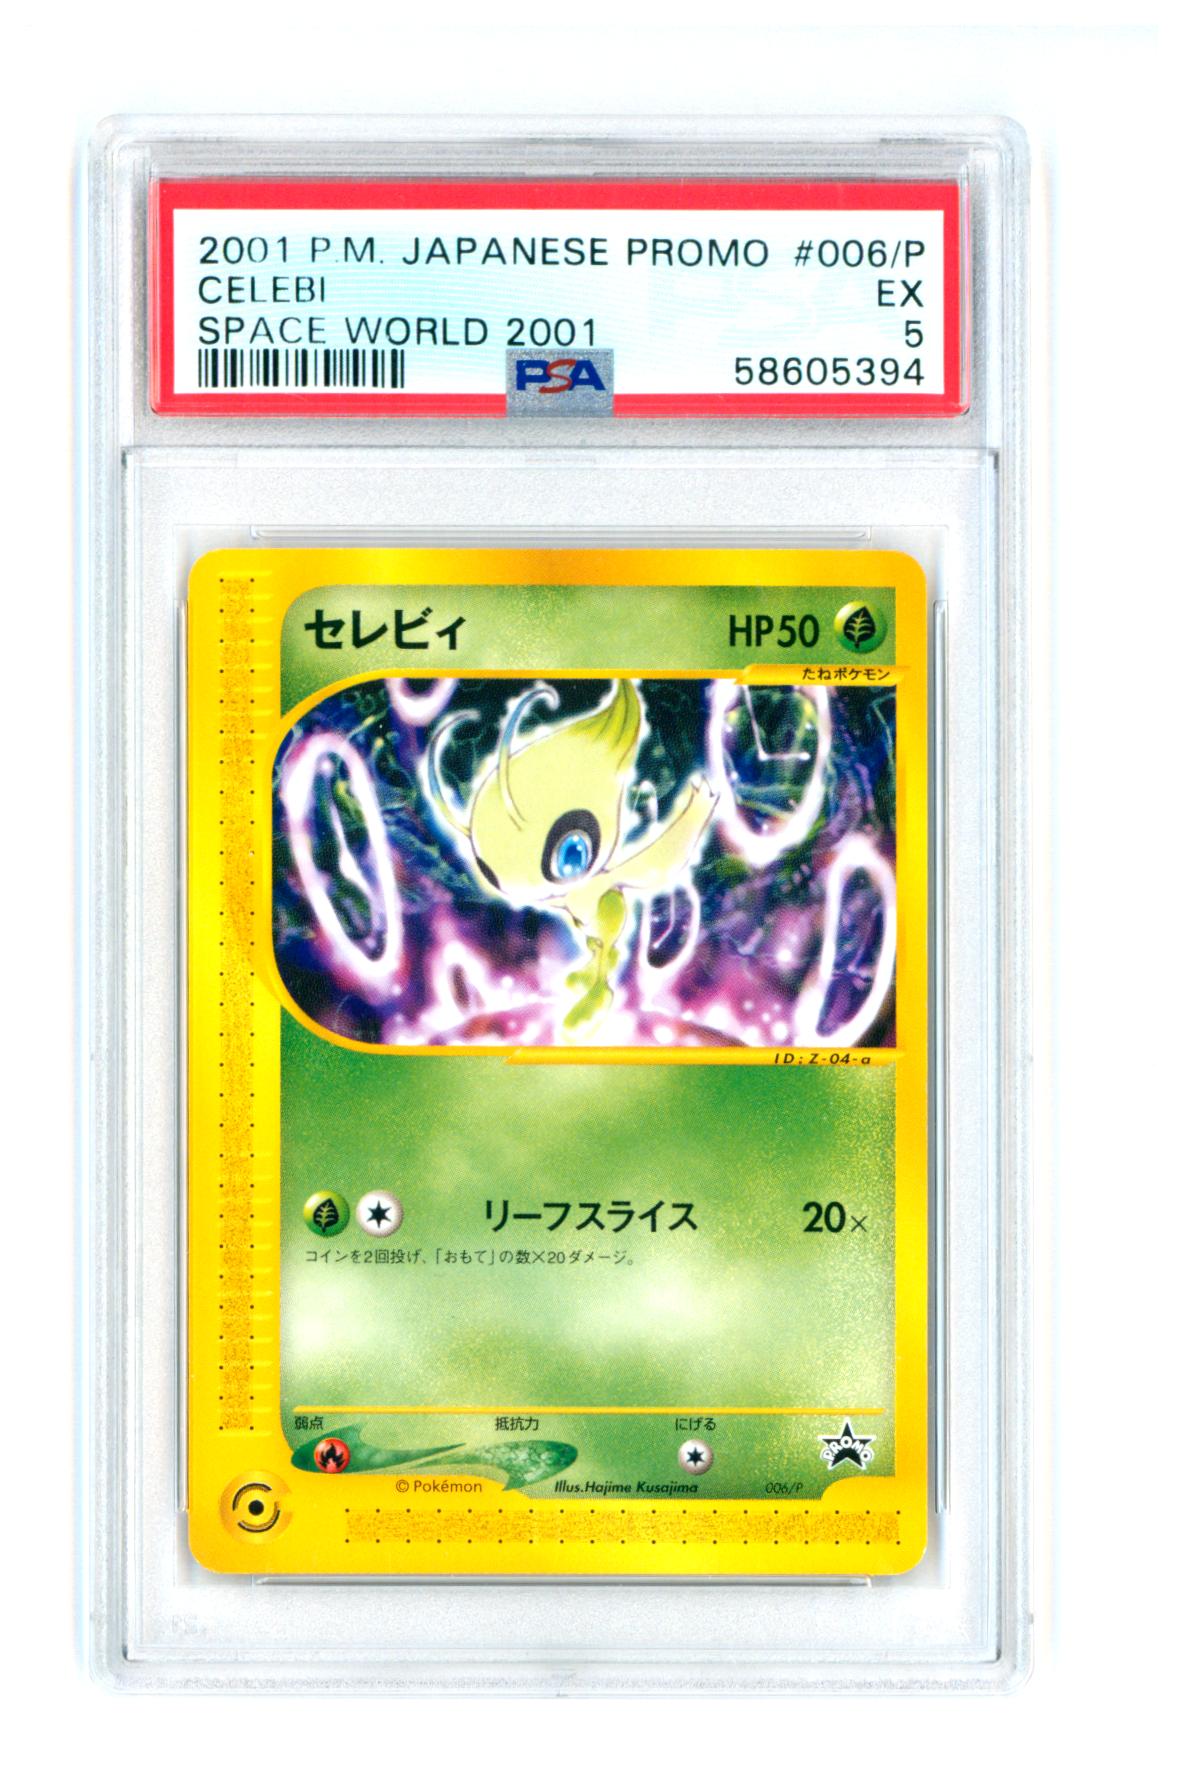 Celebi 006/P - Japanese Space World 2001 Promo - PSA 5 EX​ - Pokémon